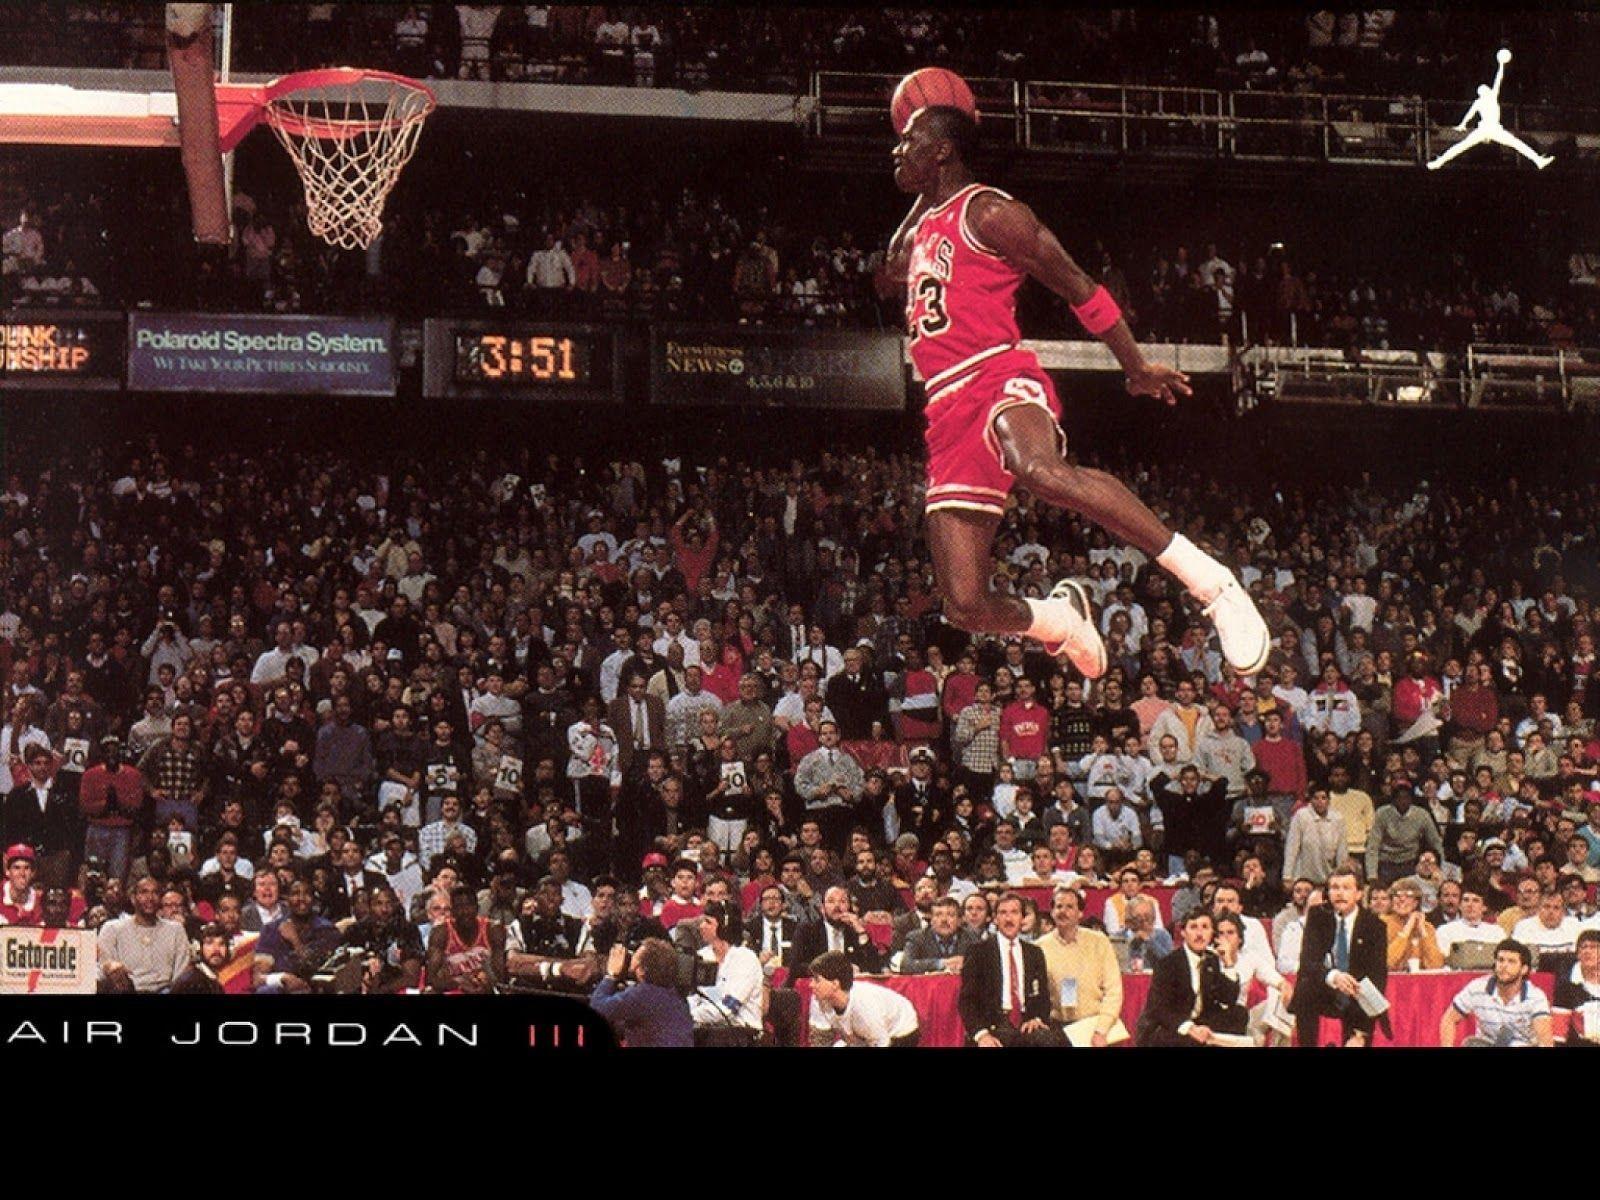 Michael Jordan Wallpaper HD Hd Cool 7 HD Wallpaper. Hdimges